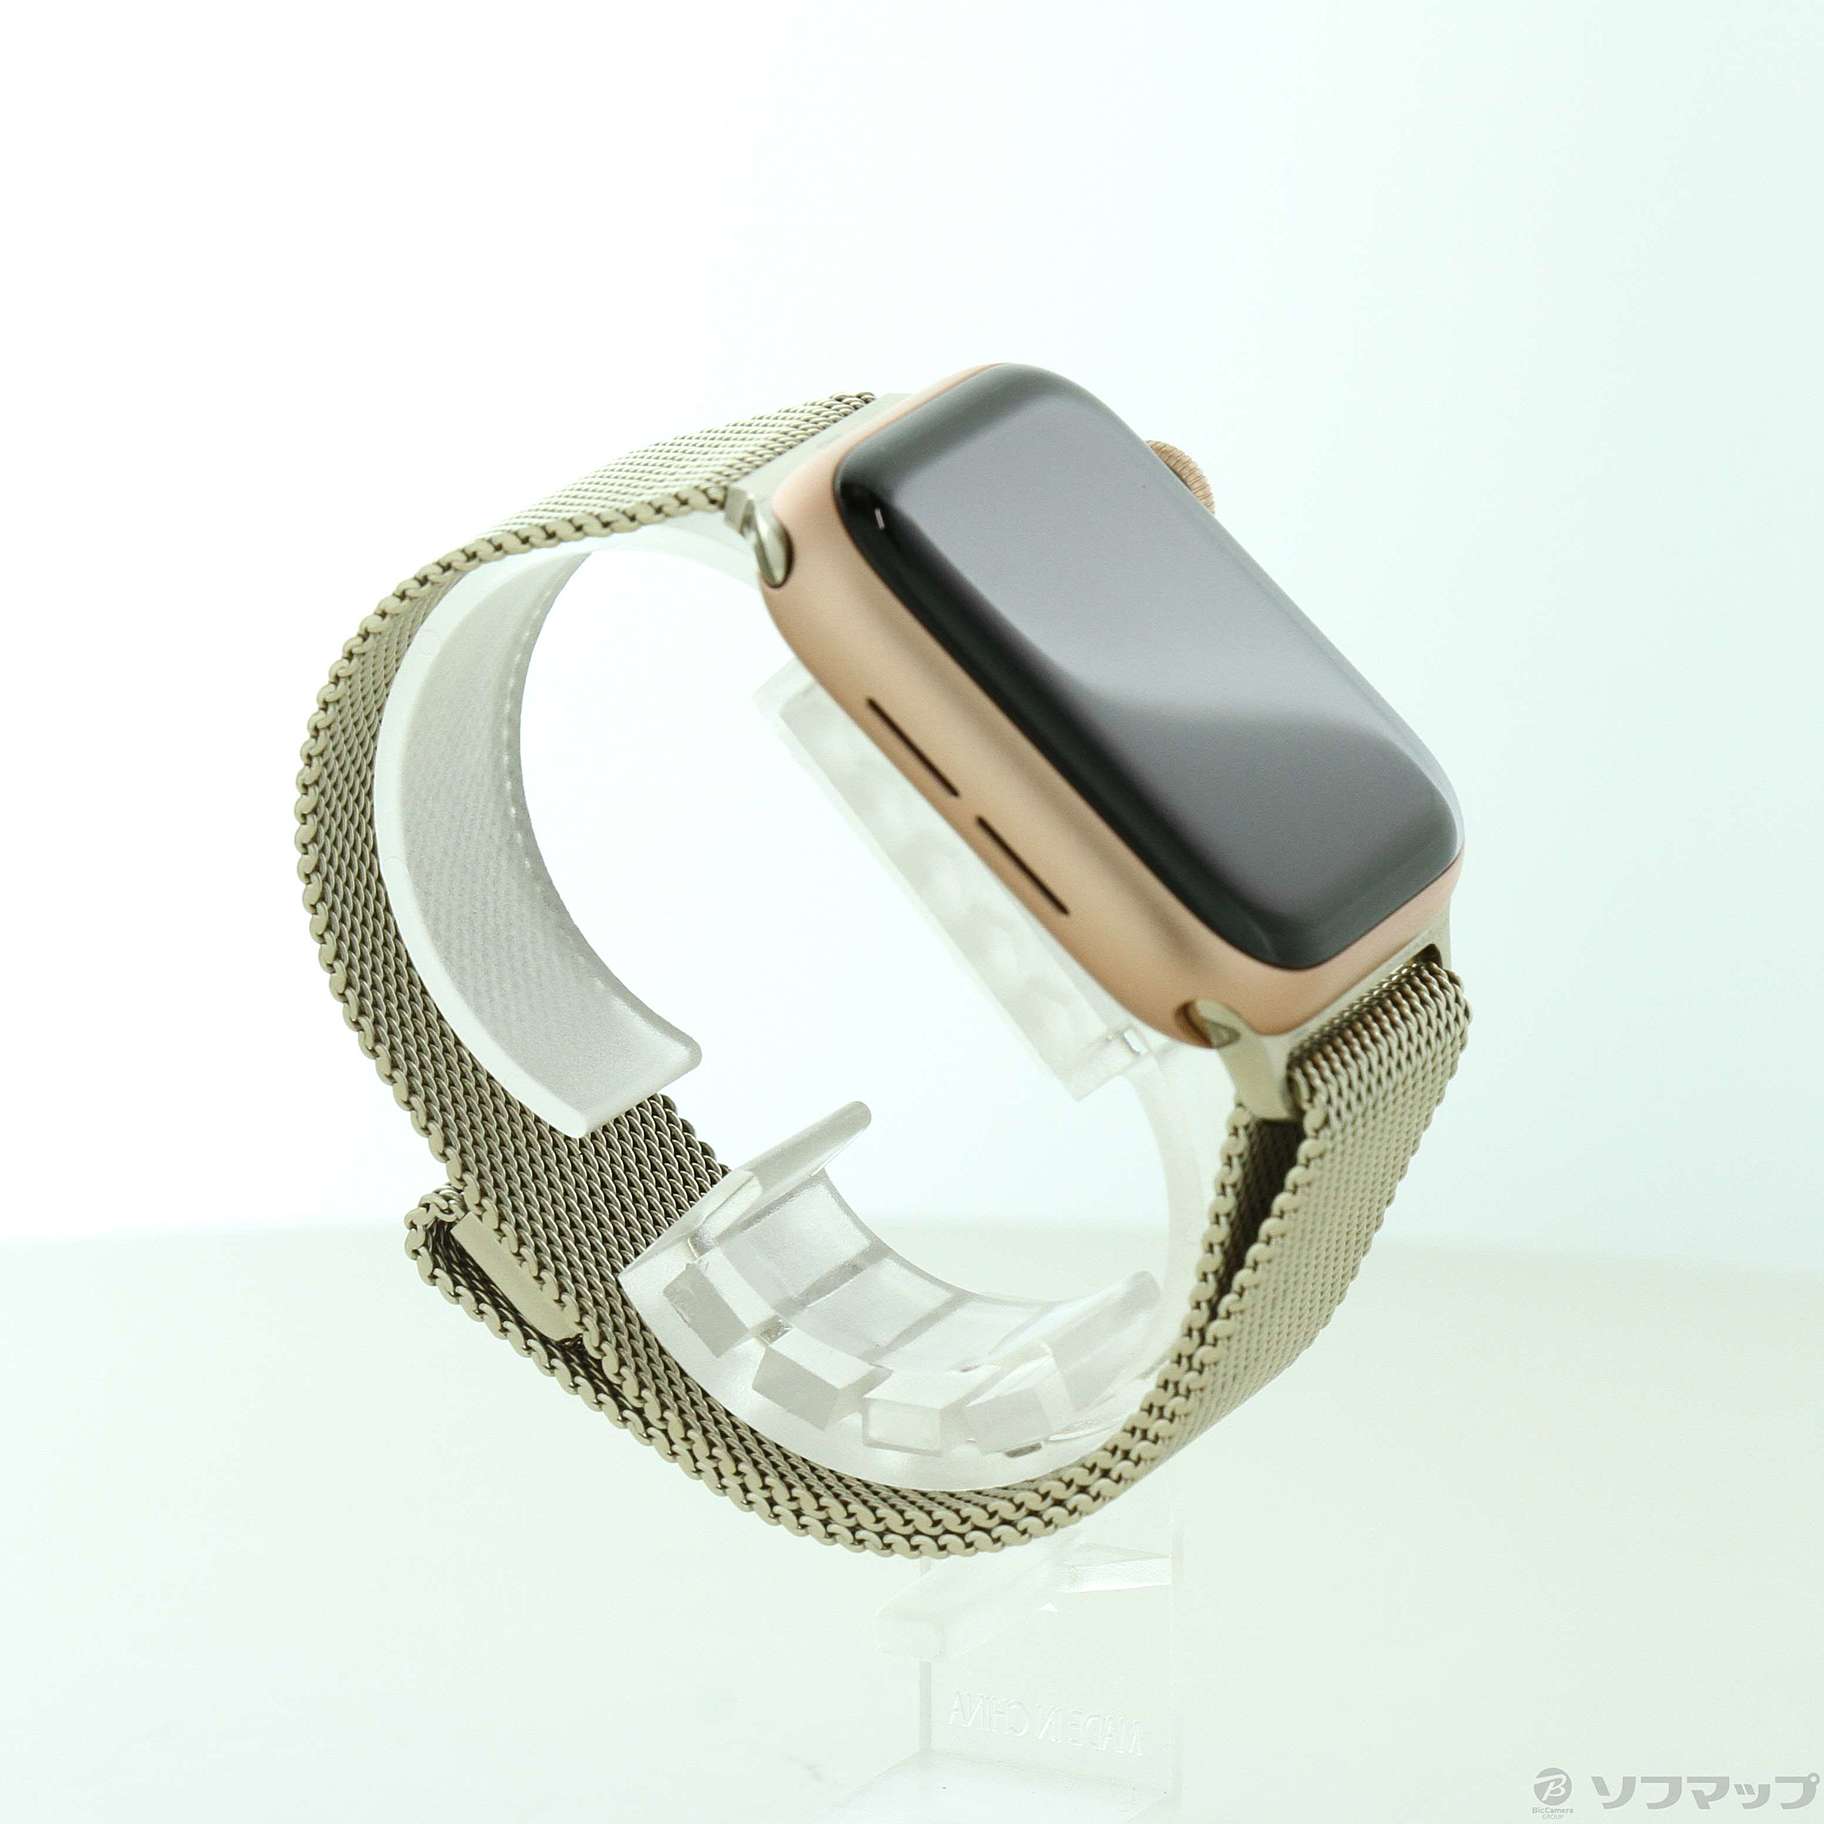 Apple Watch SE 第1世代 GPS 40mm ゴールドアルミニウムケース ゴールドミラネーゼループ